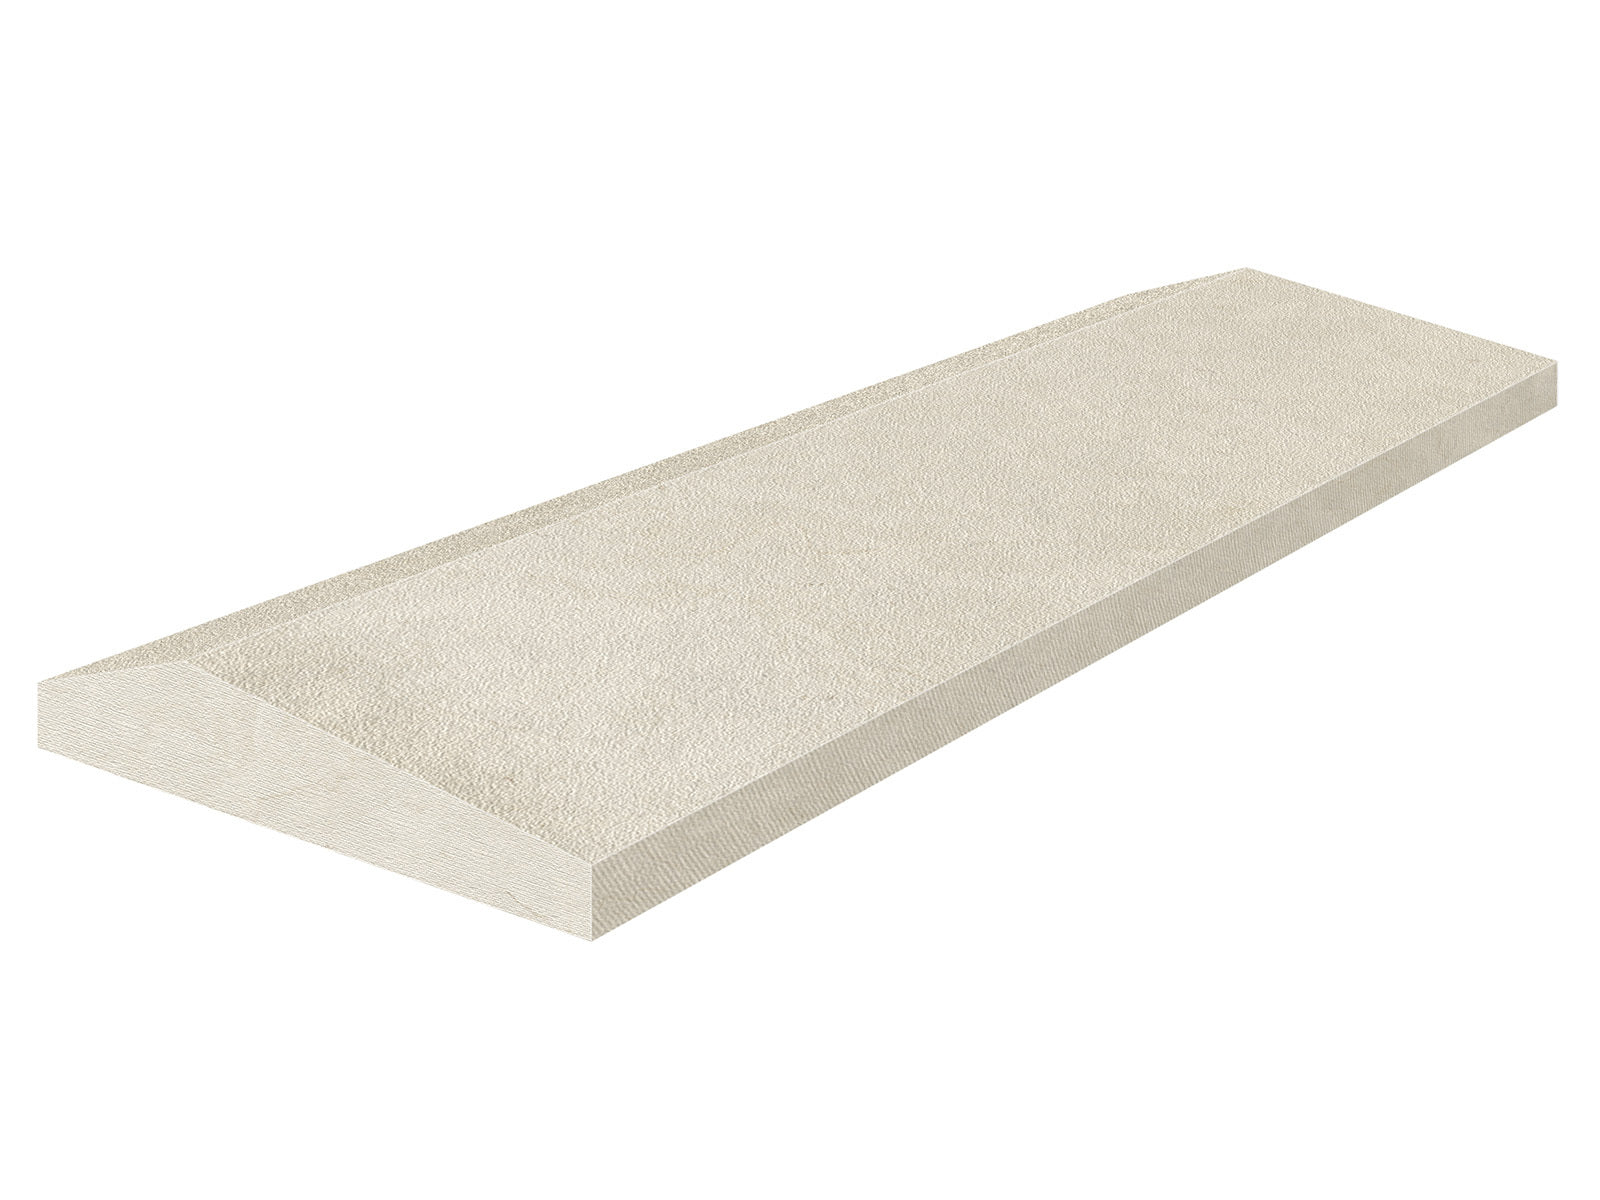 surface group anatolia limestone tierra halo natural stone prisma grained tile grained straight edge rectangle 4х12